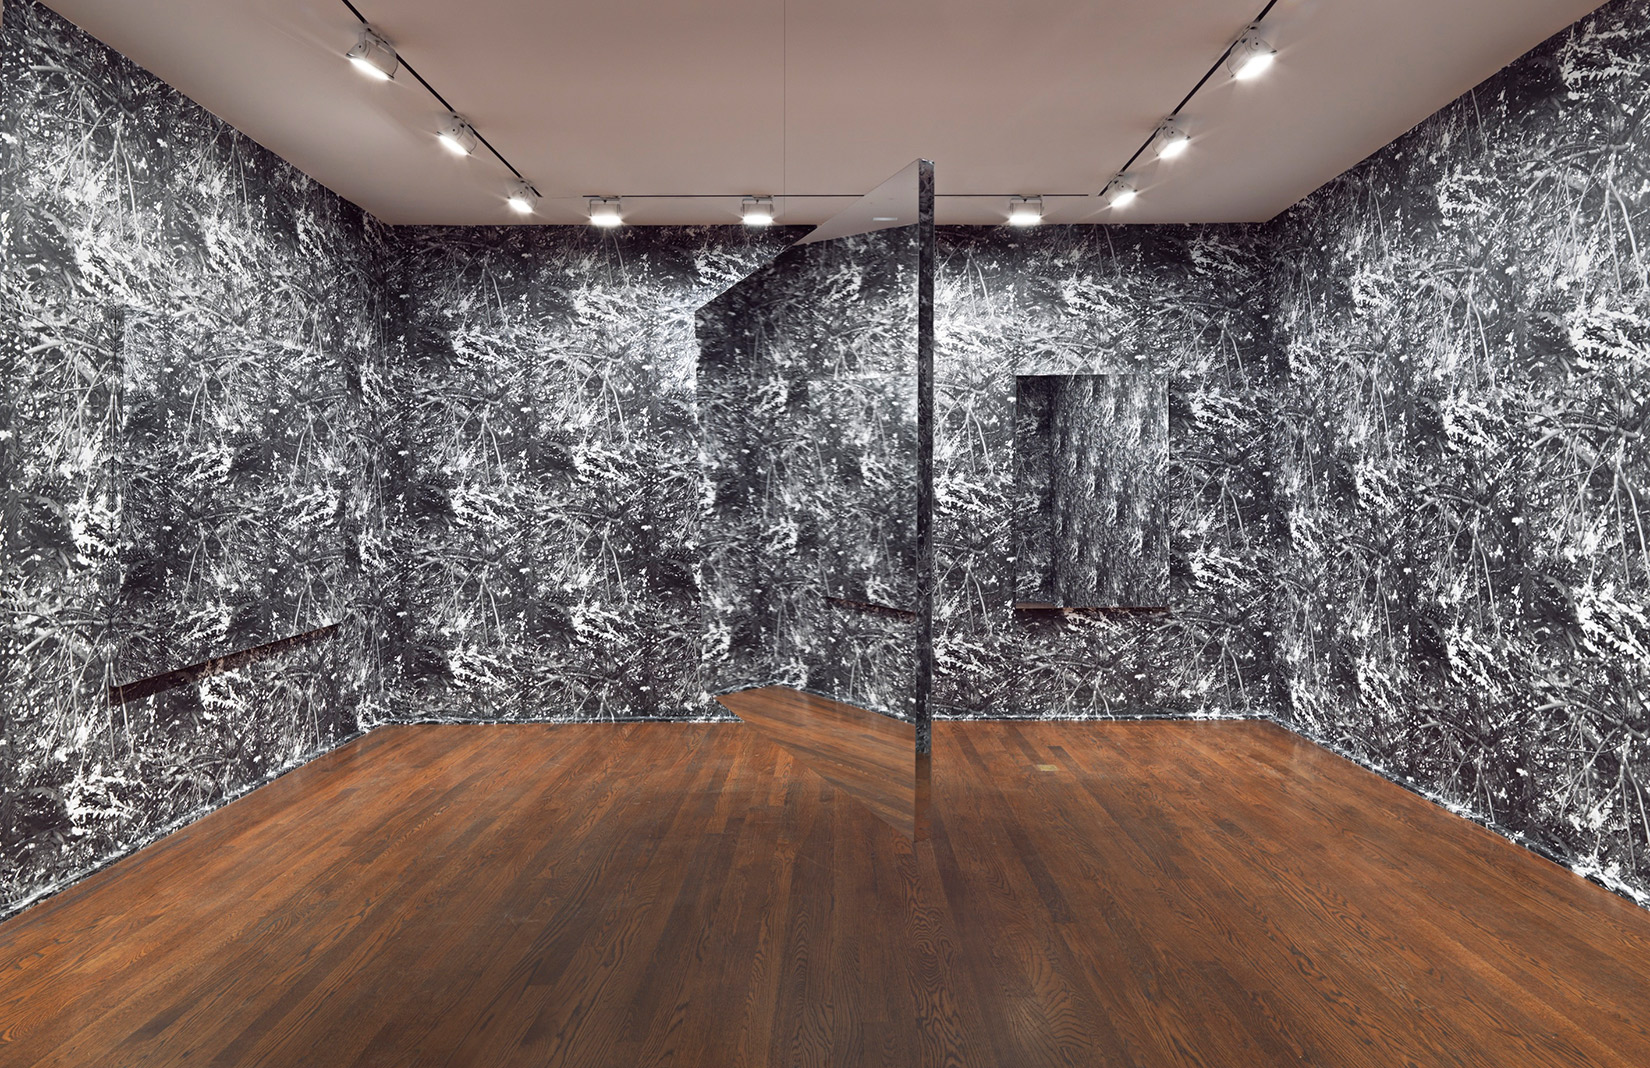 Artist Rachel Khedoori creates chaos in a New York gallery